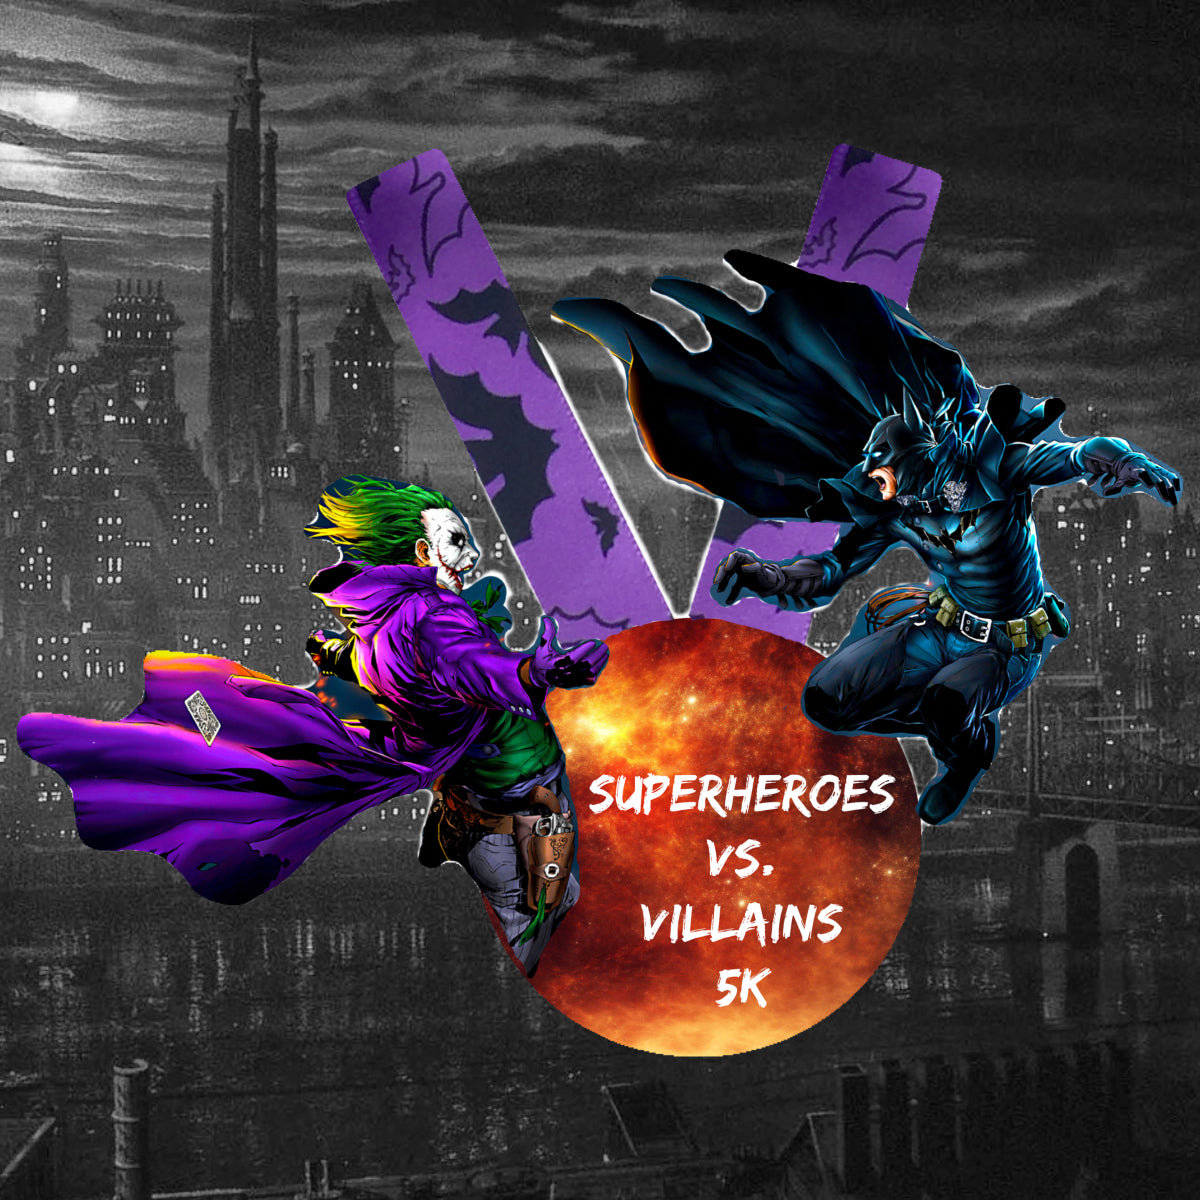 Superheroes Vs. Villains 5K